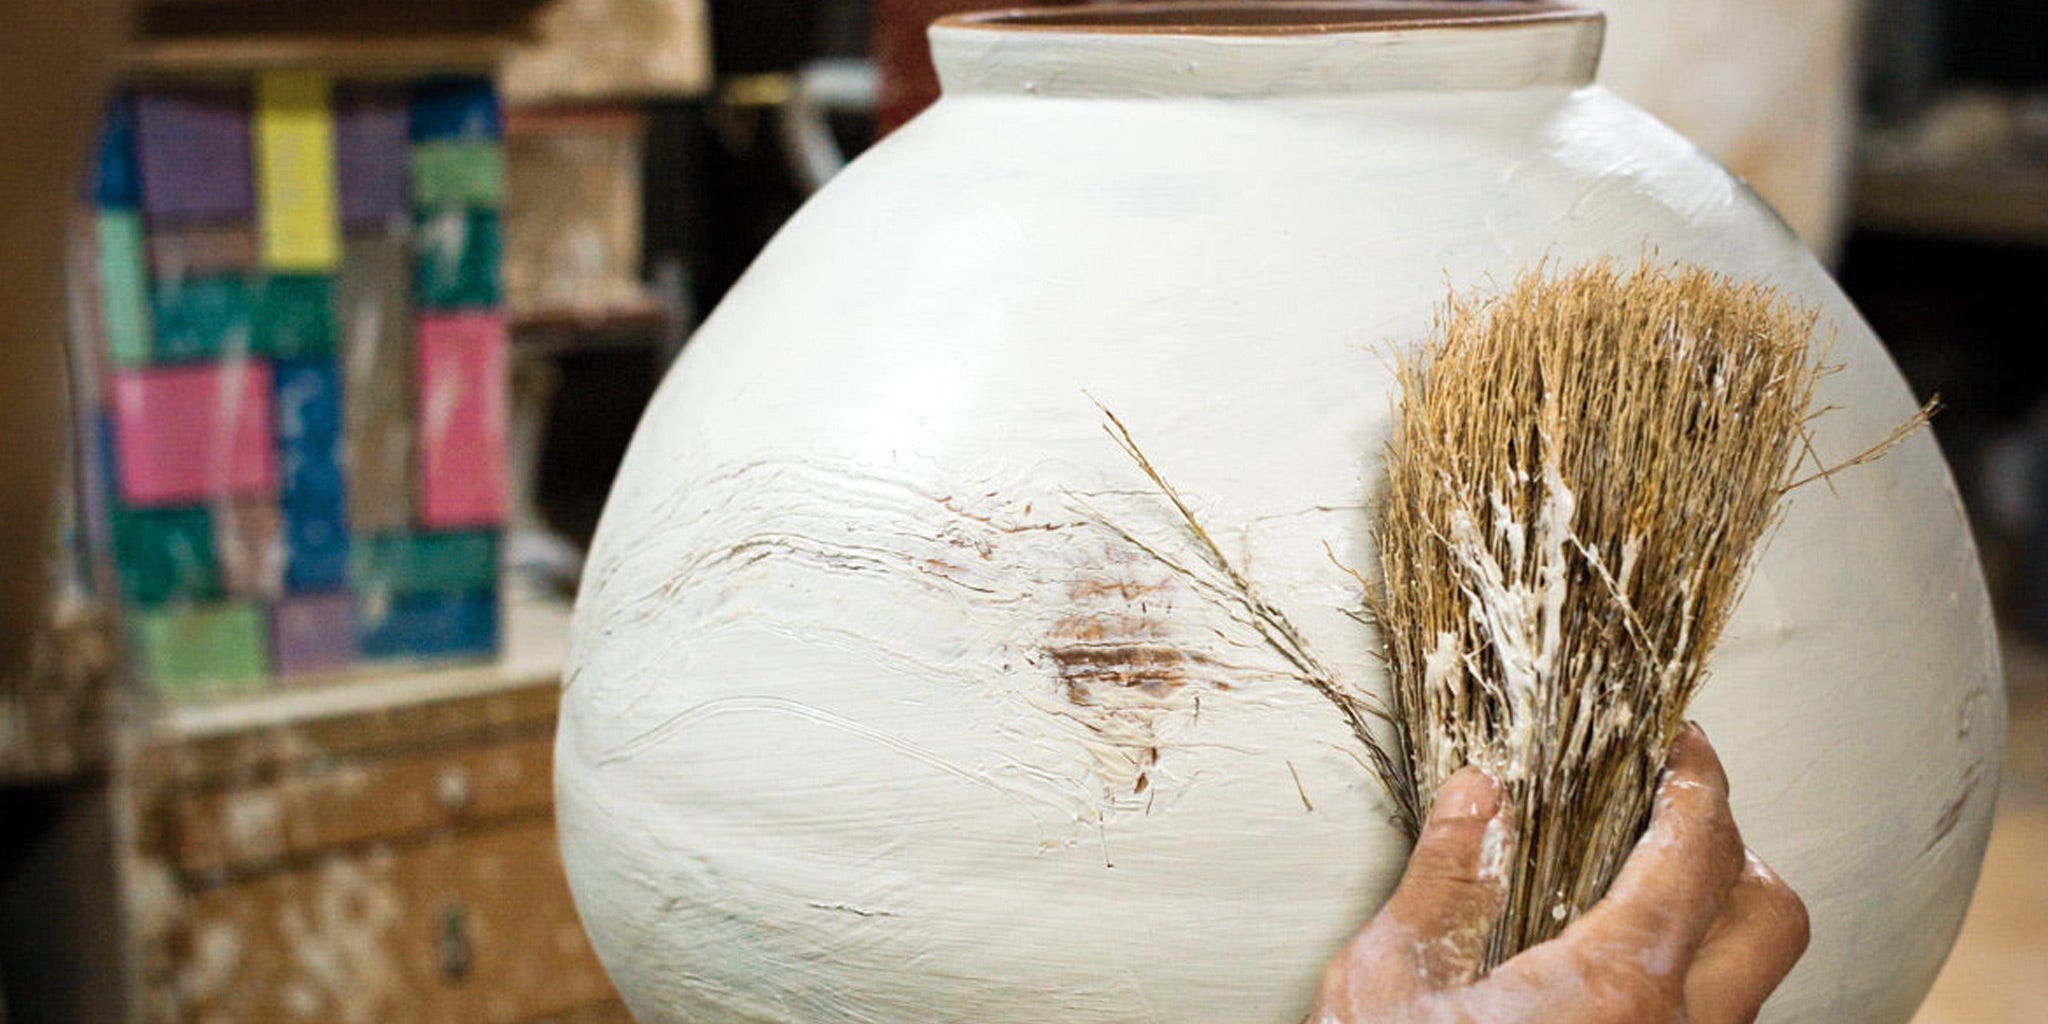 Clay ceramics, Pottery vase, Pottery sculpture